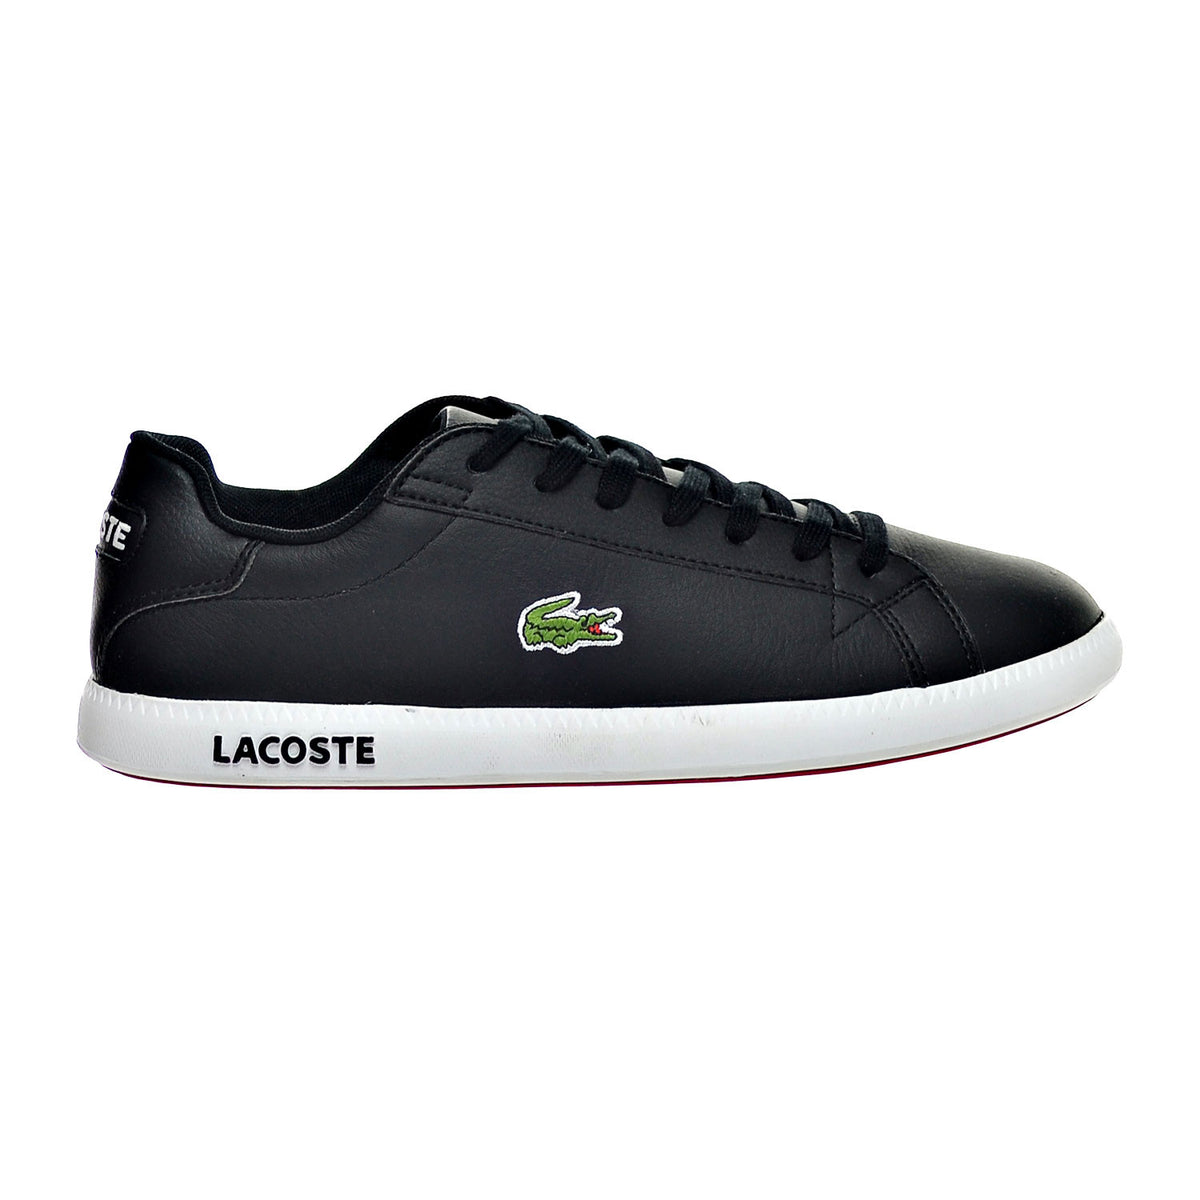 Lacoste Graduate LCR3 SPM Leather/Synthetic Men's Black/White